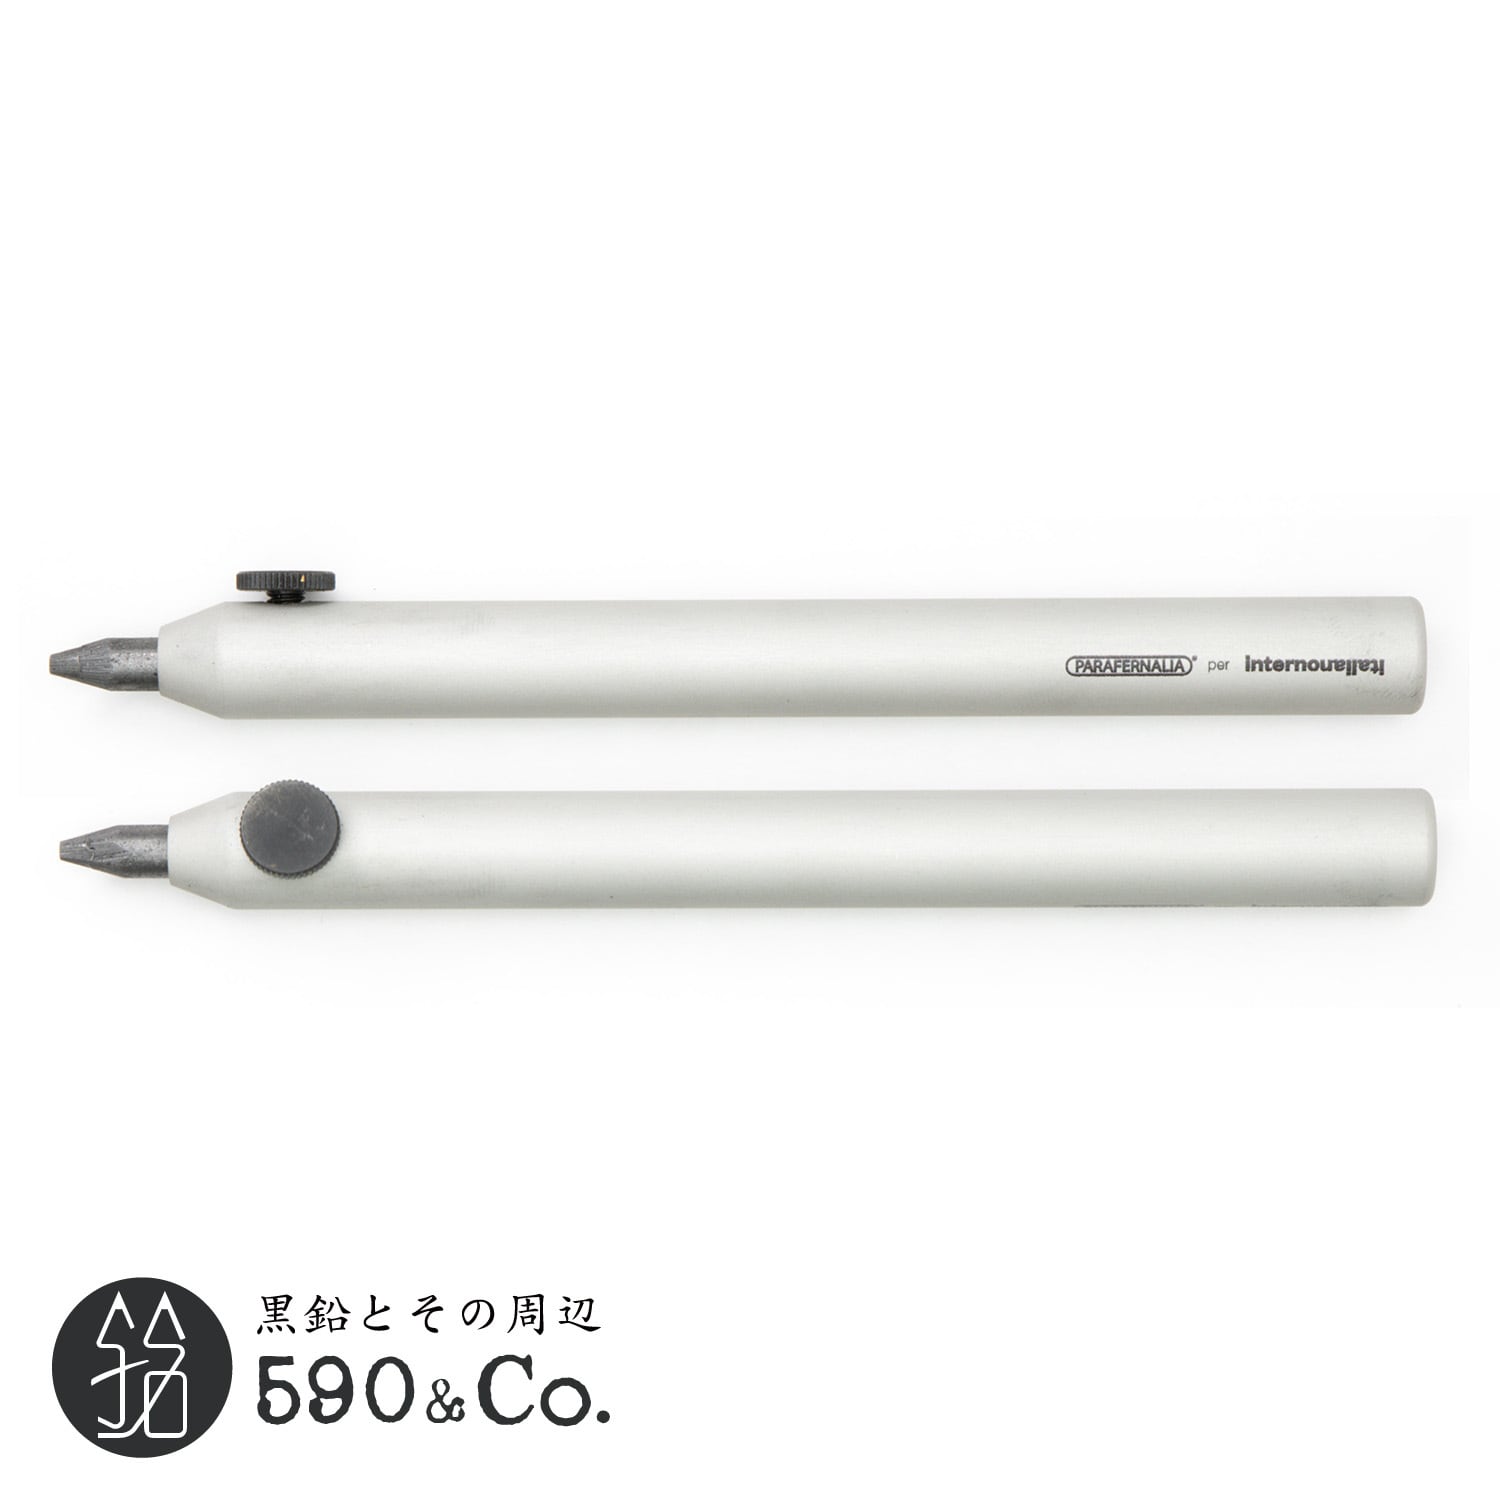 PARAFERNALIA × Internoitaliano】 Neri Mechanical Pencil 5.5ミリ芯ホルダー (アルミ)  590Co.